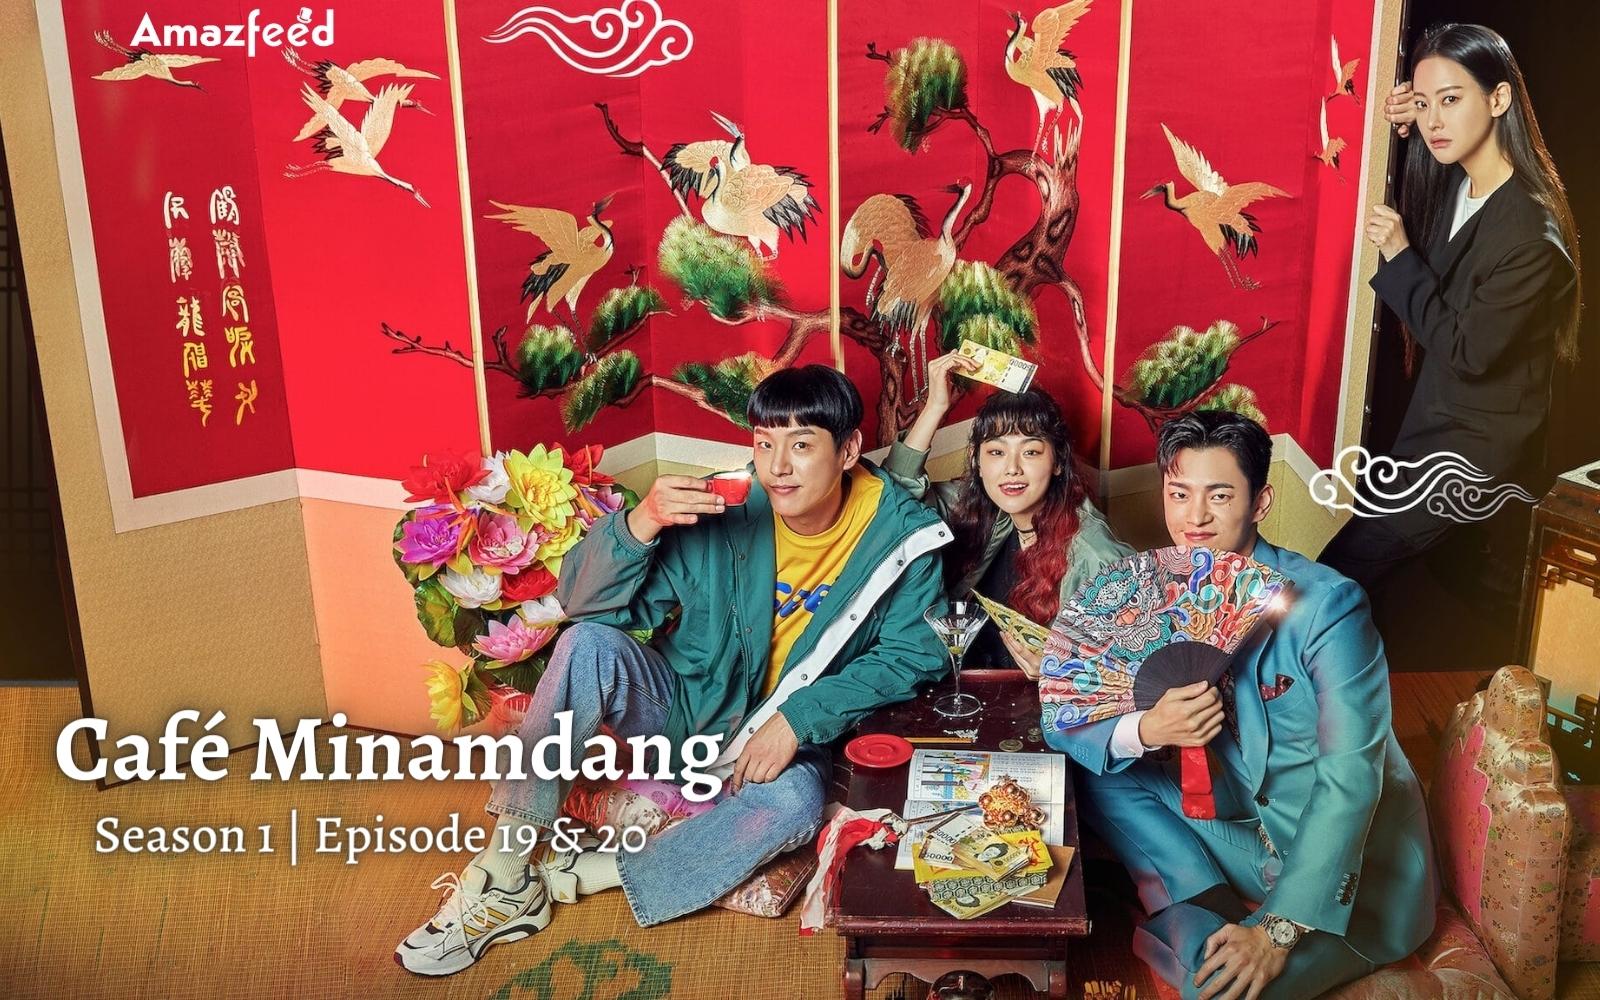 Café Minamdang Episode 19 & 20 : Release Date, Countdown, Recap, Premiere Time, Spoiler, Where to Watch & Cast